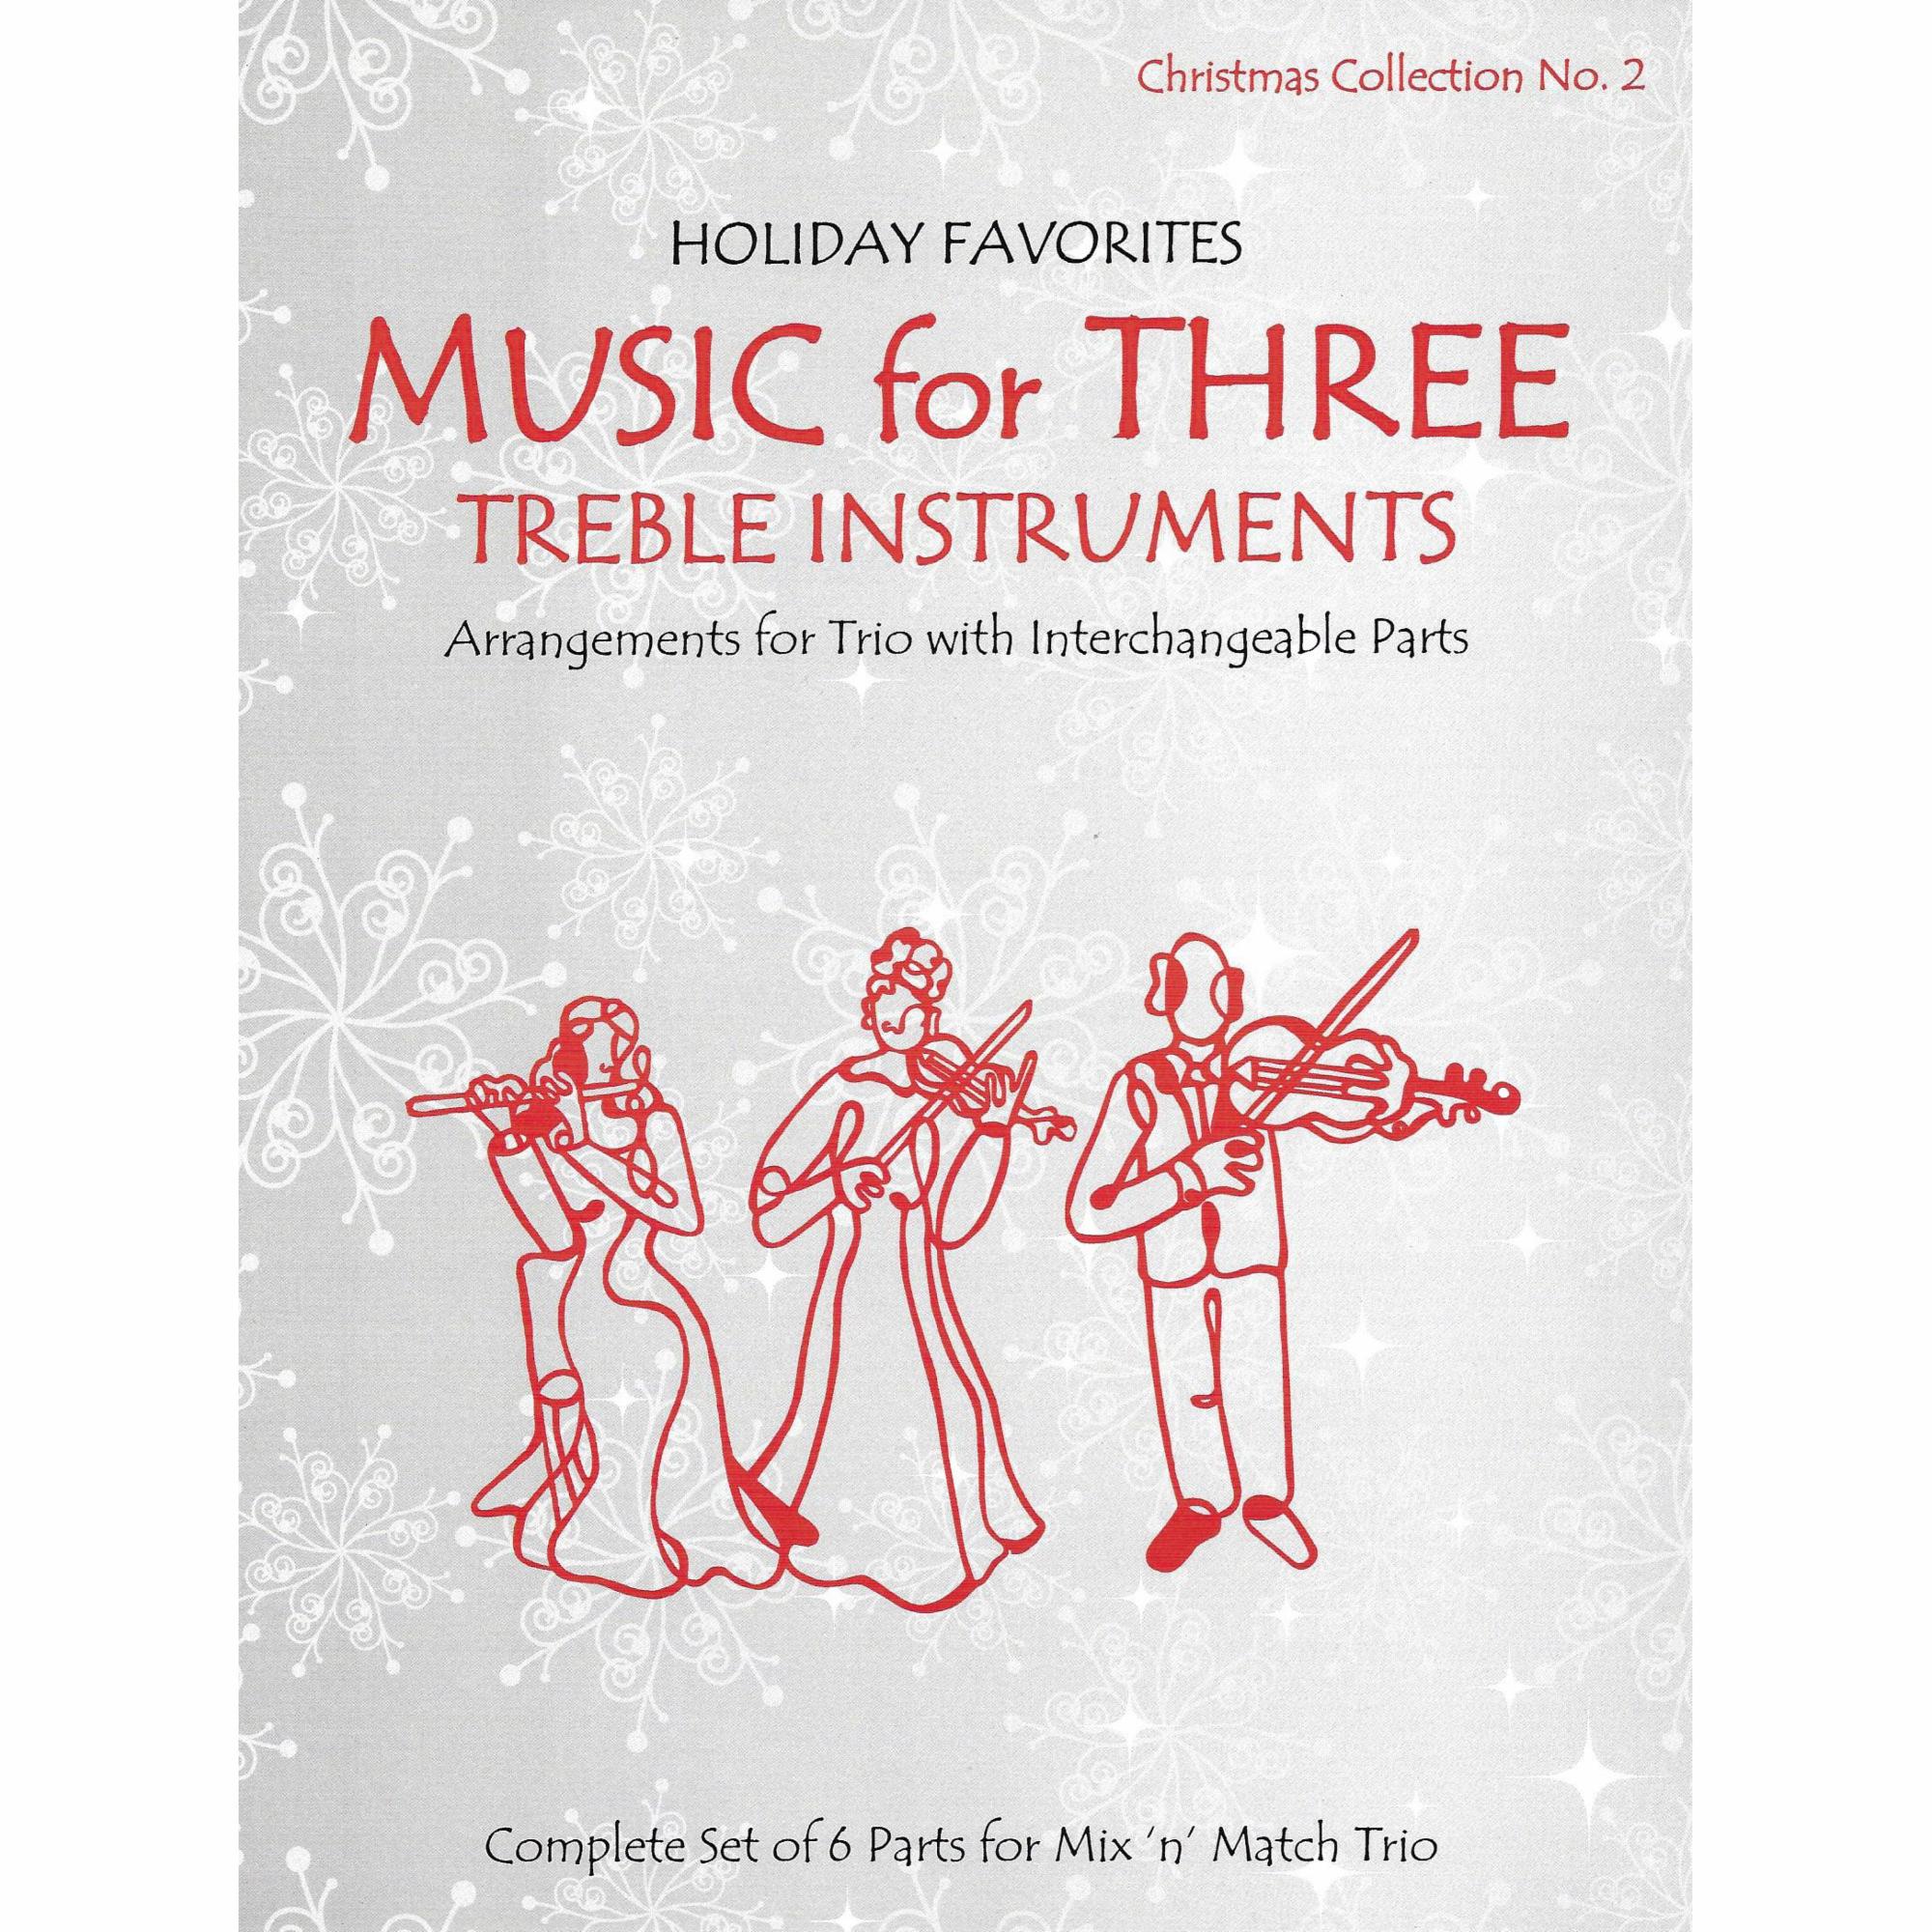 Holiday Favorites for Three Violins (or Two Violins and Viola), Volumes 1-4